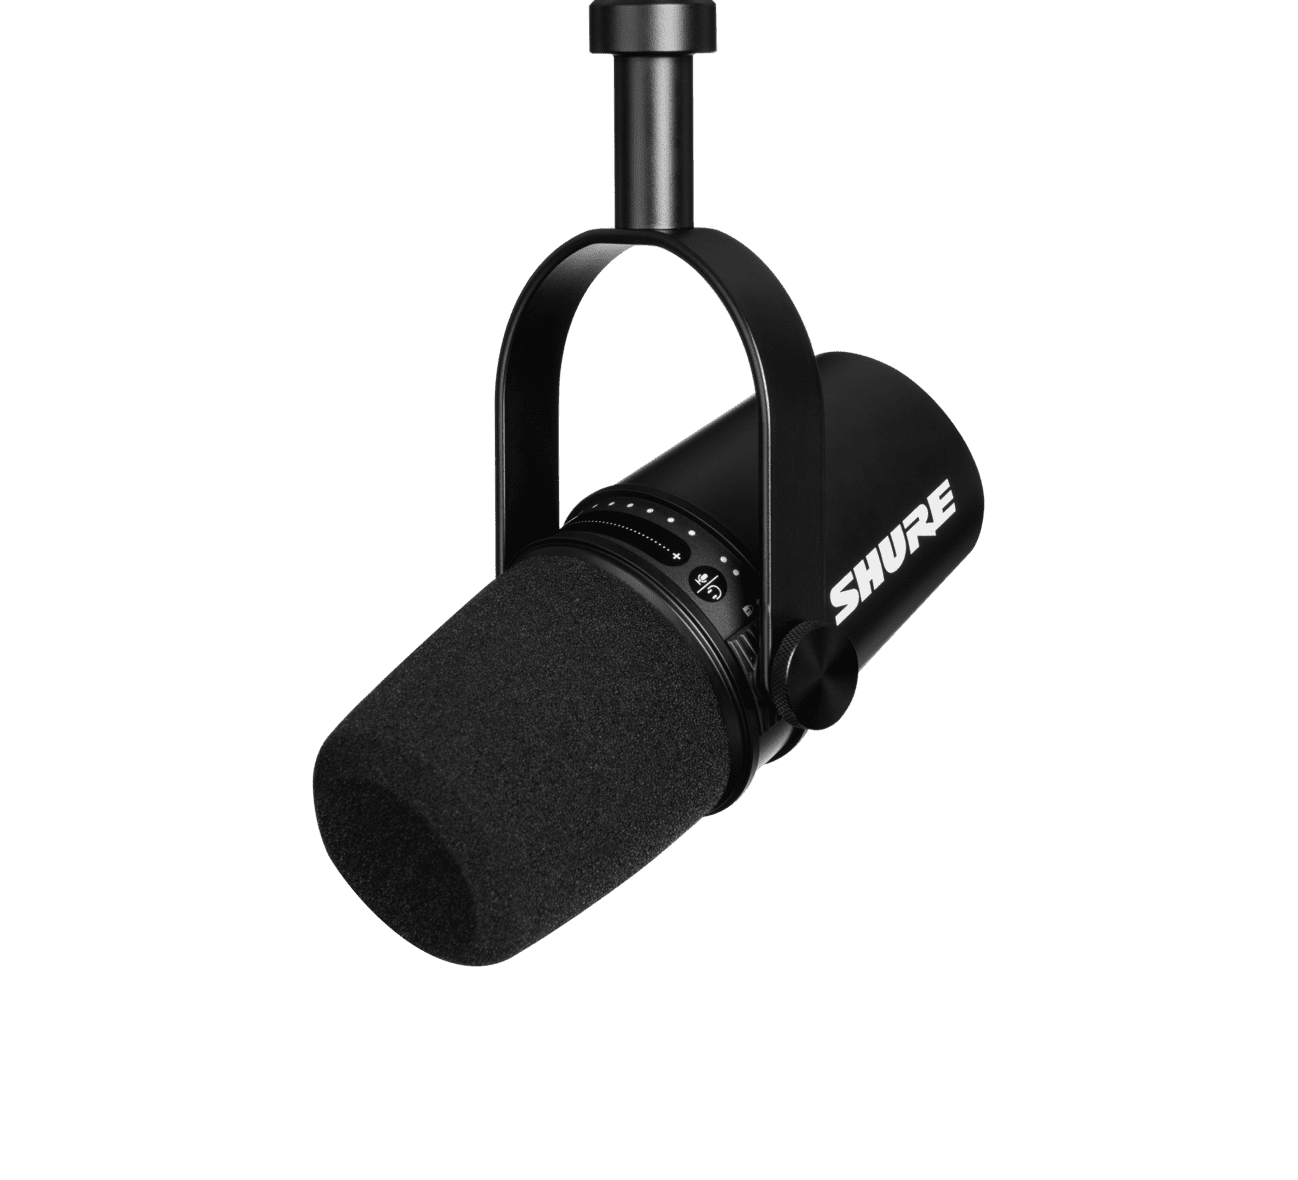 MV7 Shure Microphone